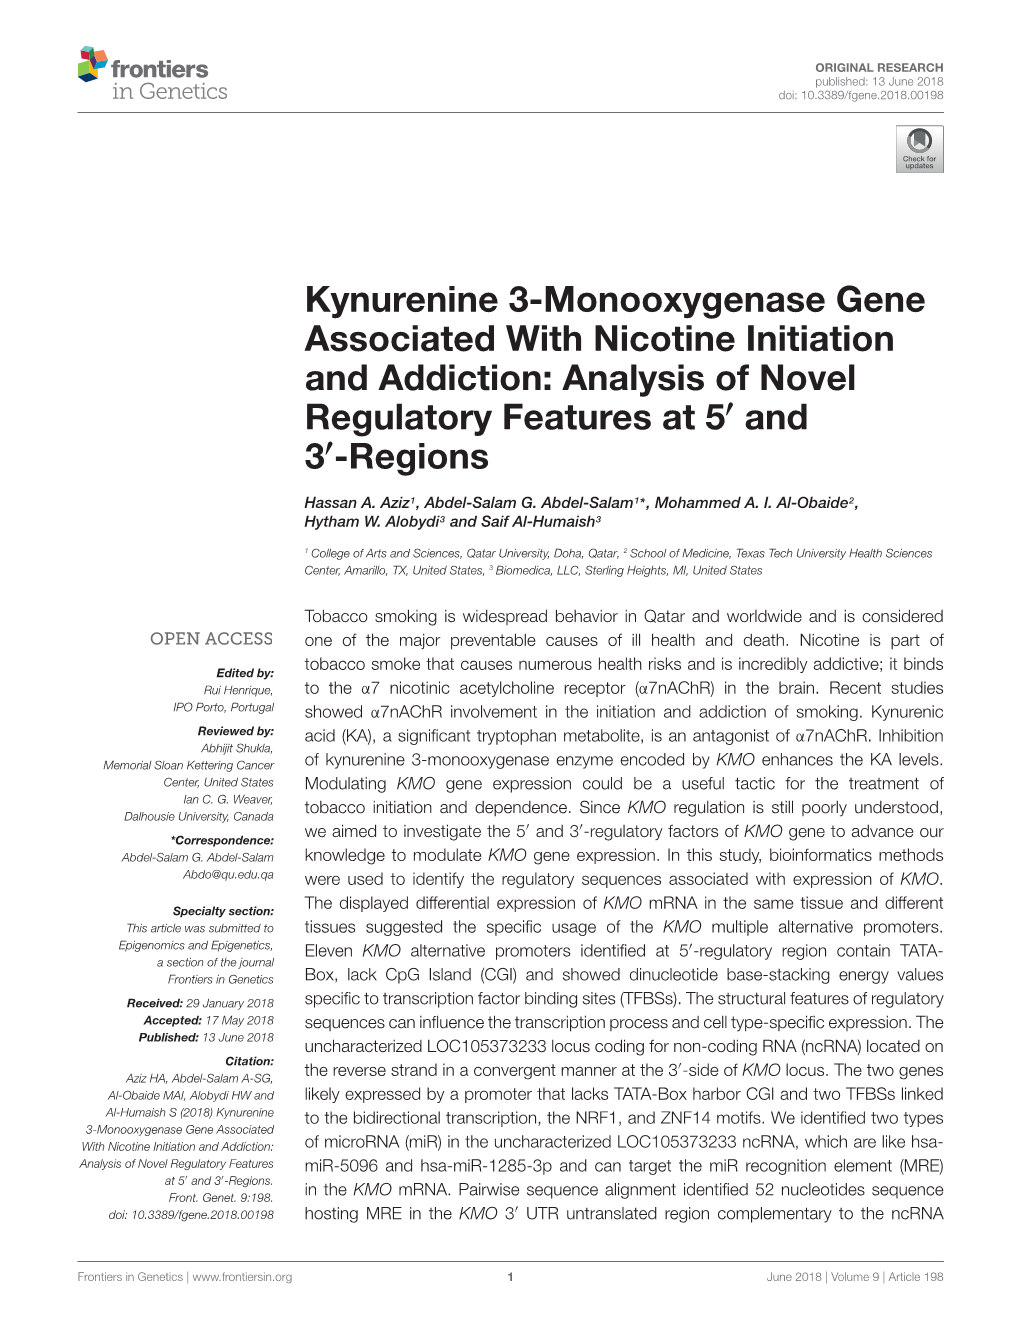 Kynurenine 3-Monooxygenase Gene Associated with Nicotine Initiation and Addiction: Analysis of Novel Regulatory Features at 50 and 30-Regions